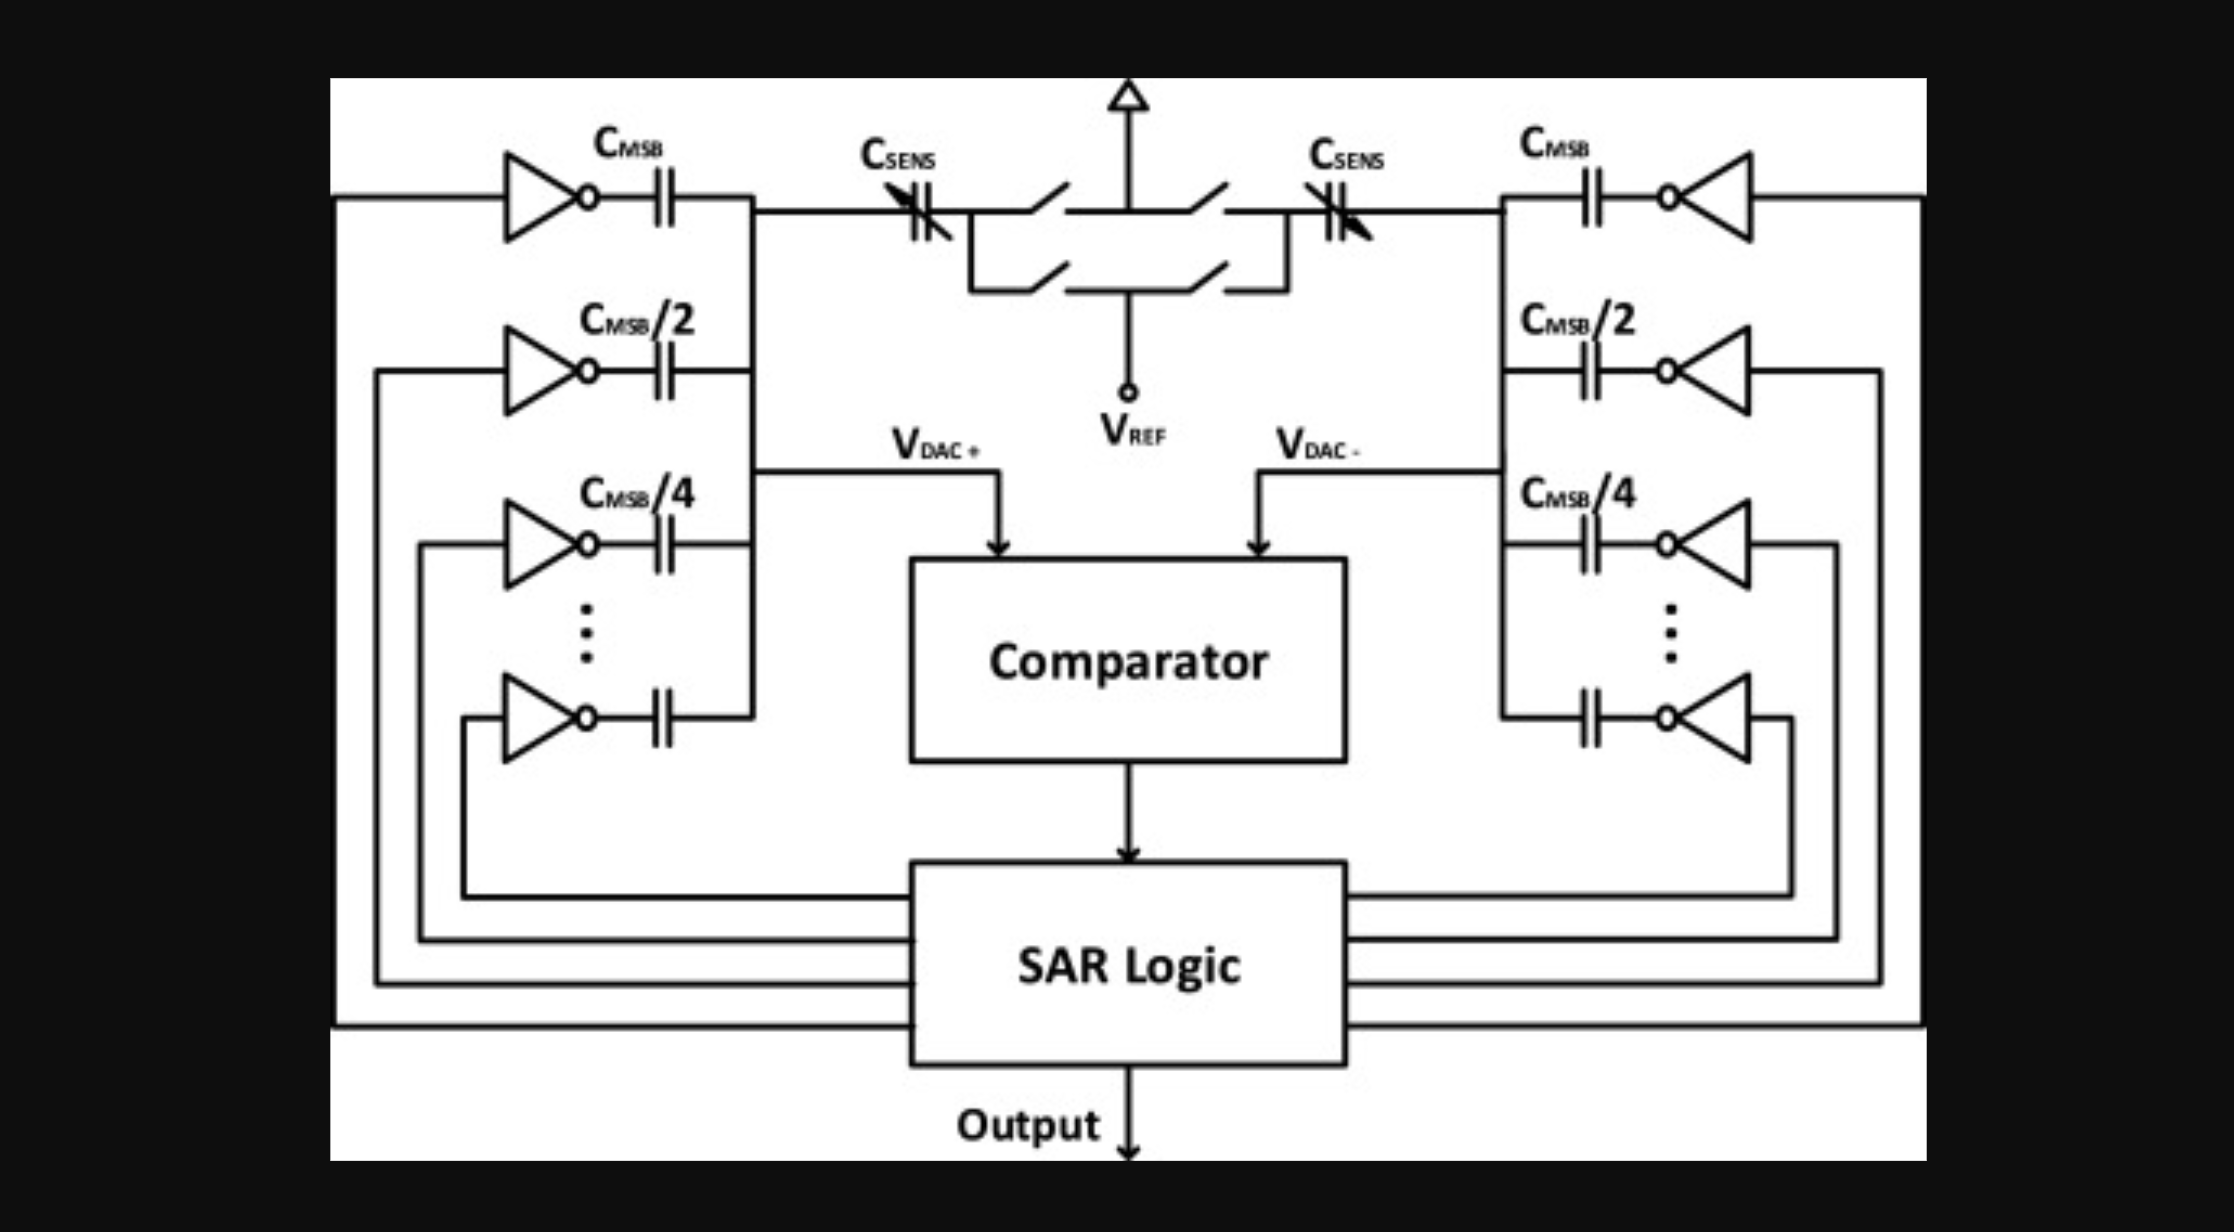 A 45.8 fJ/Step, energy-efficient, differential SAR capacitance-to-digital converter for capacitive pressure sensing